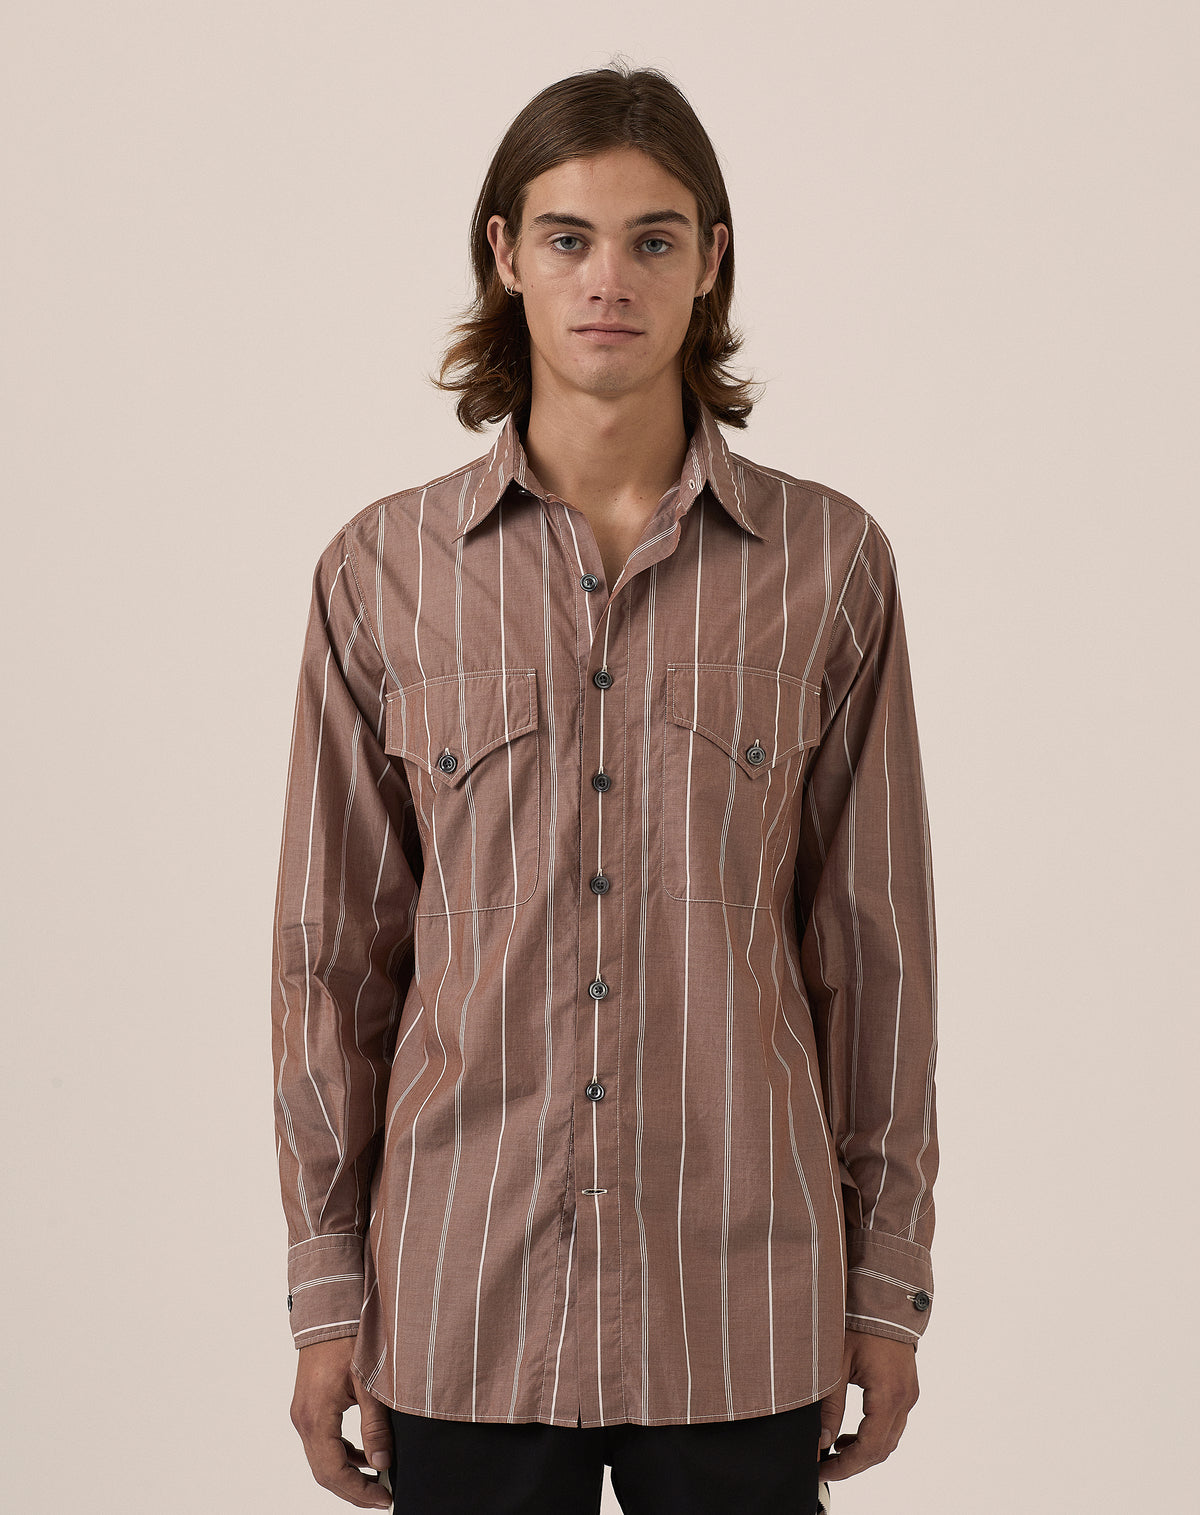 Service Shirt - Brown Multi Stripe